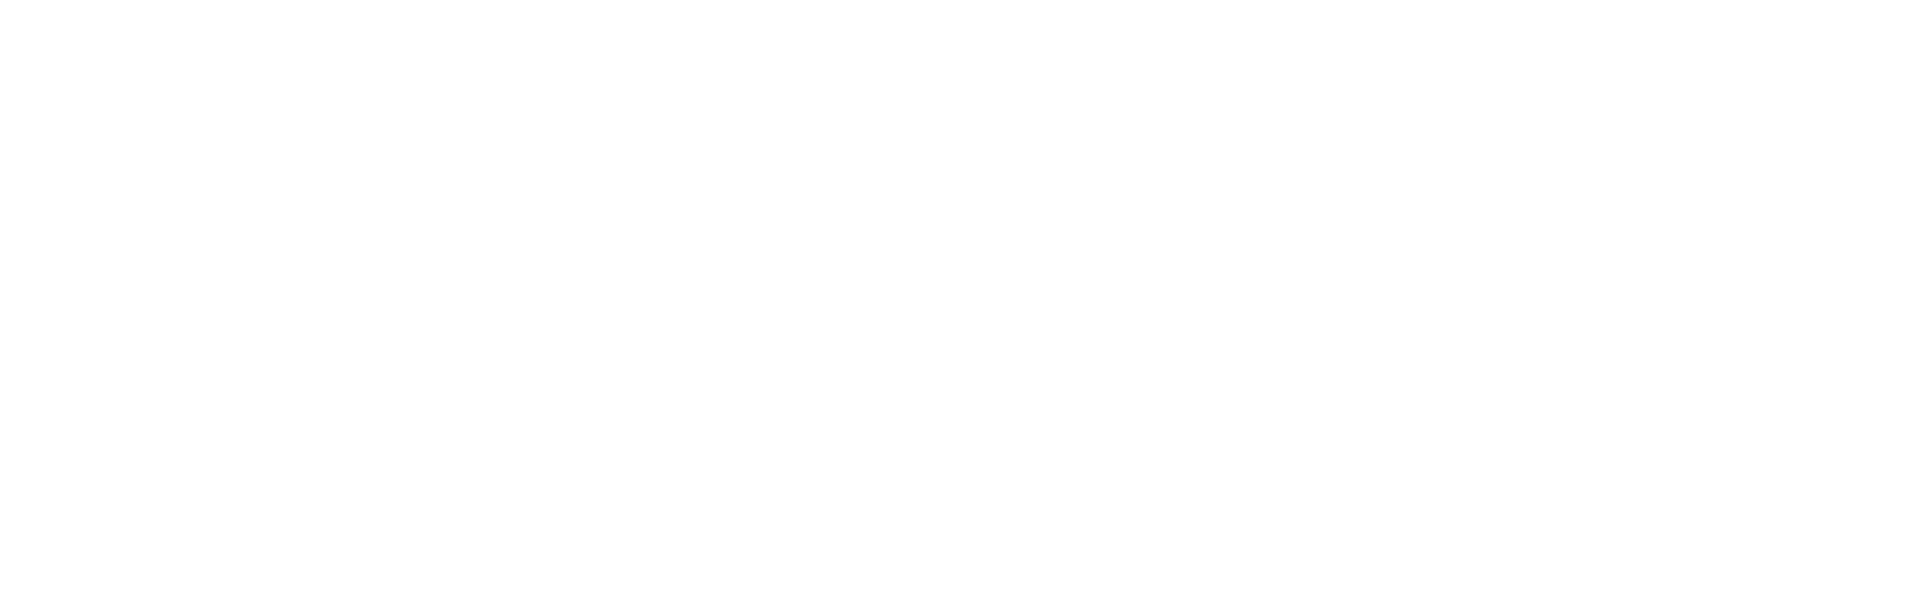 Exceptional Service 2024 - Whiteout - Landscape.png